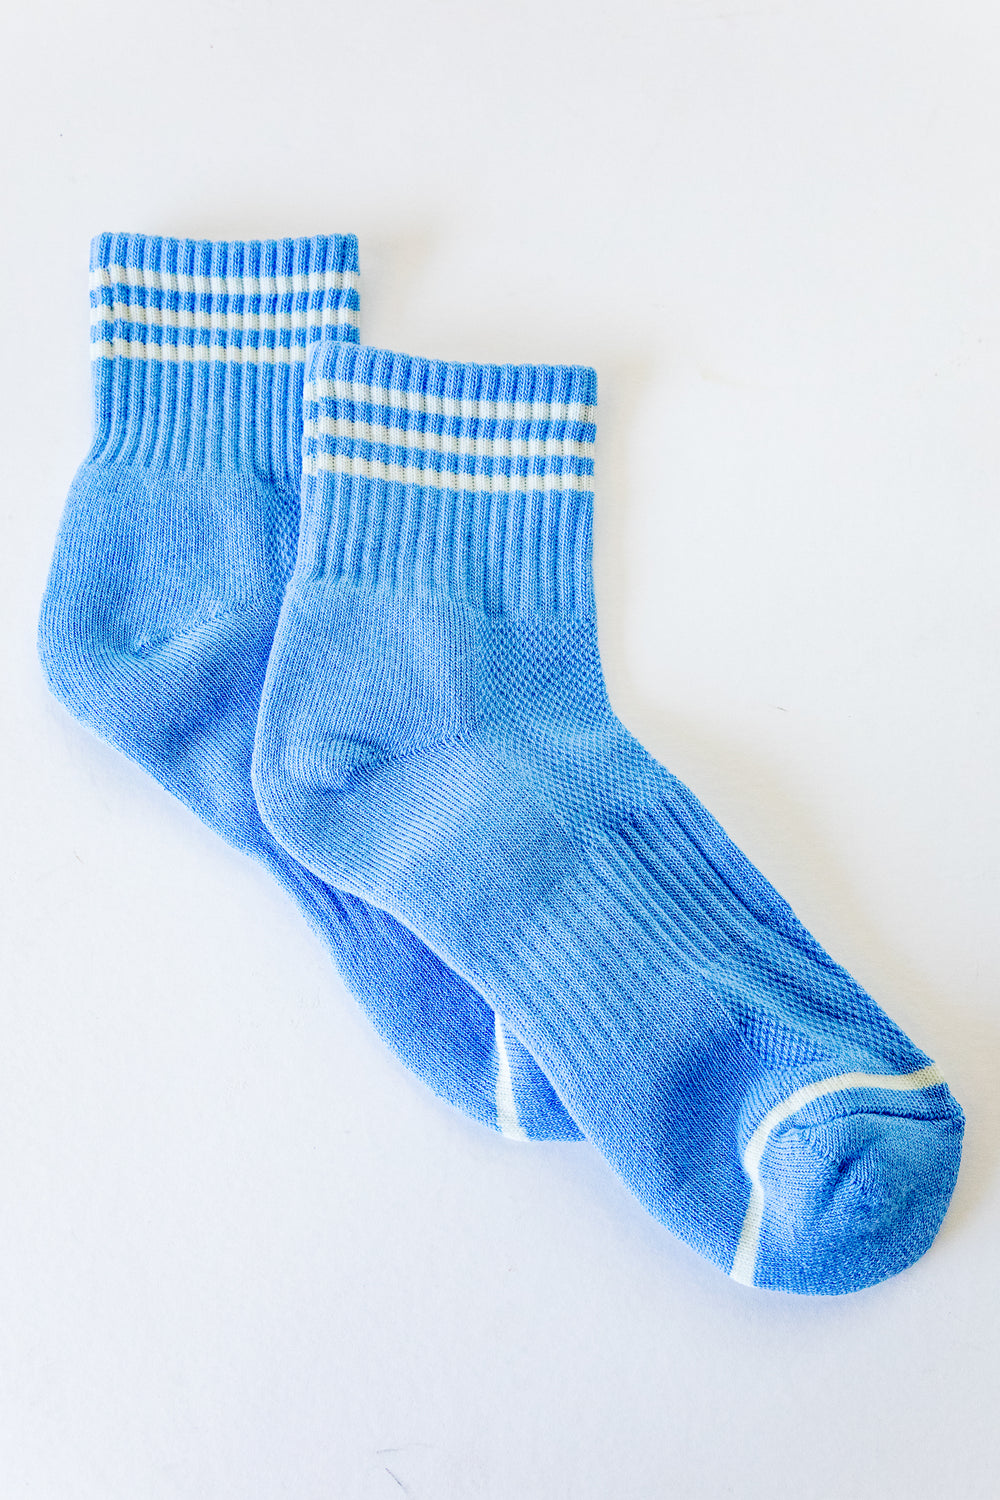 Parisian Blue Girlfriend Socks